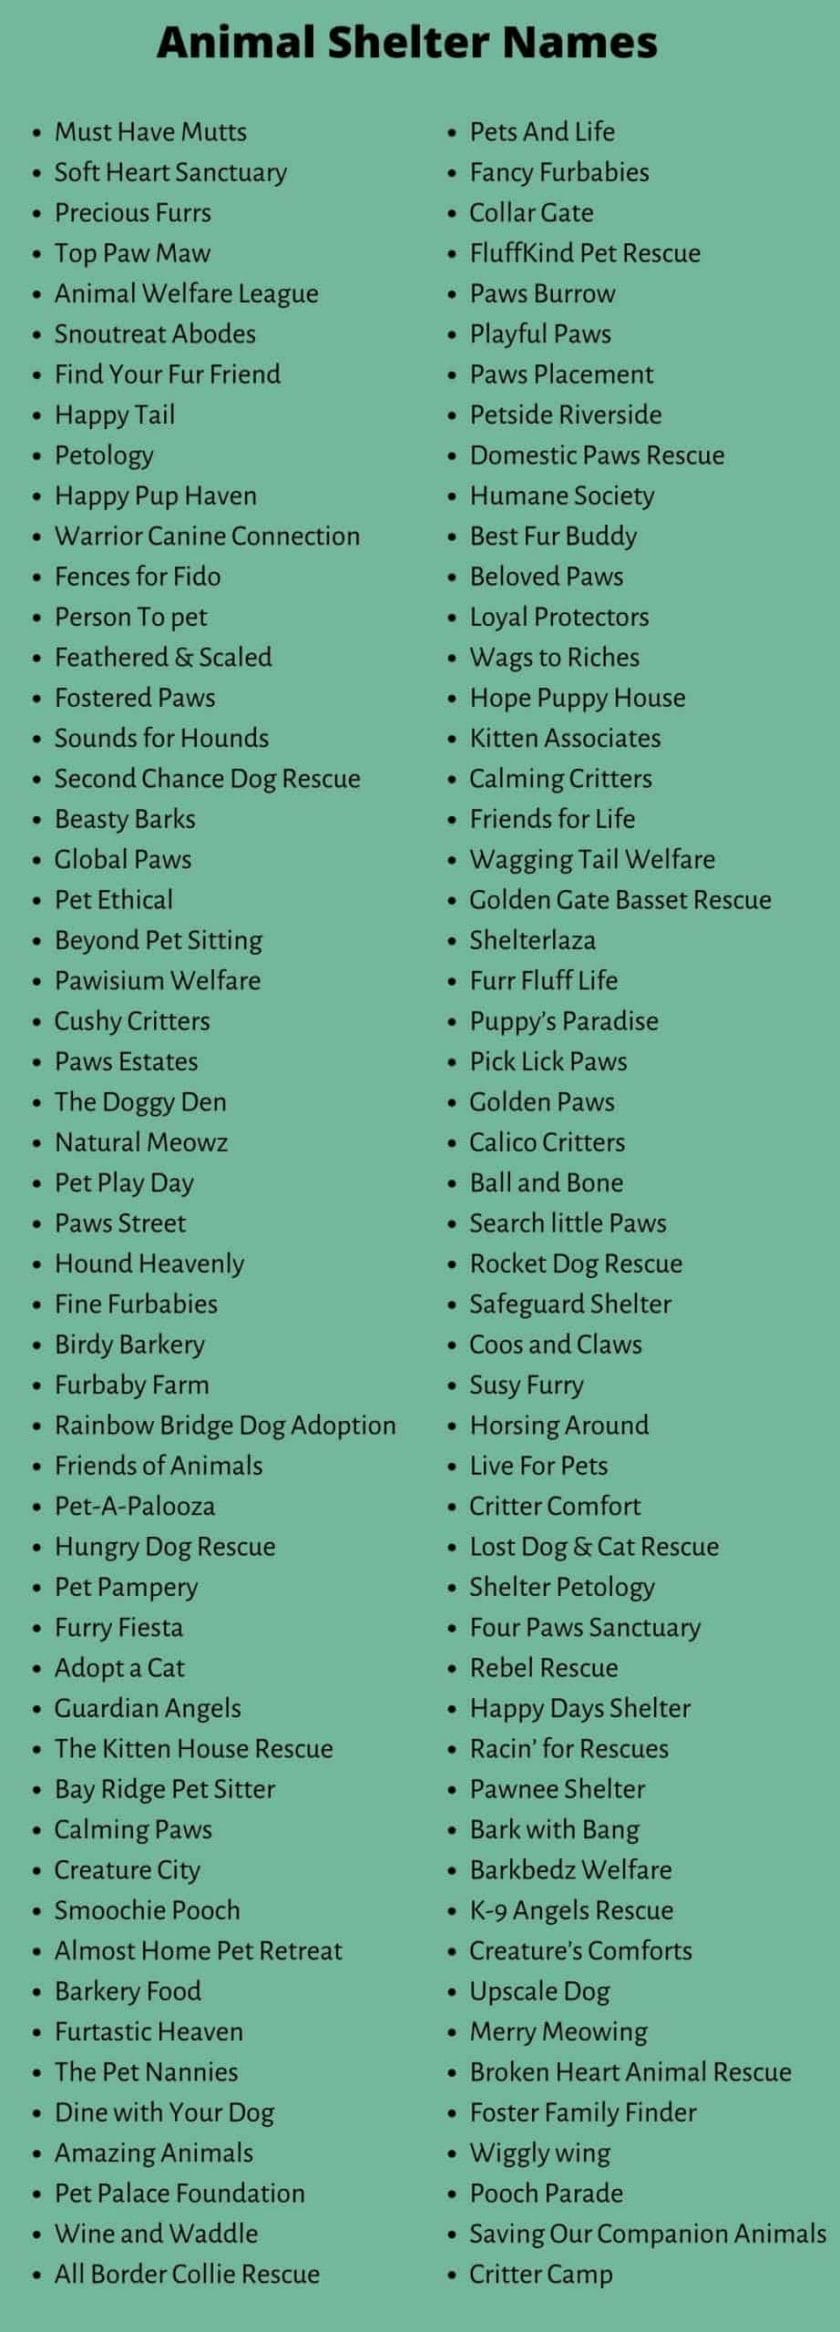 Adopt Me Gorilla Pet Name Ideas List - DigiStatement